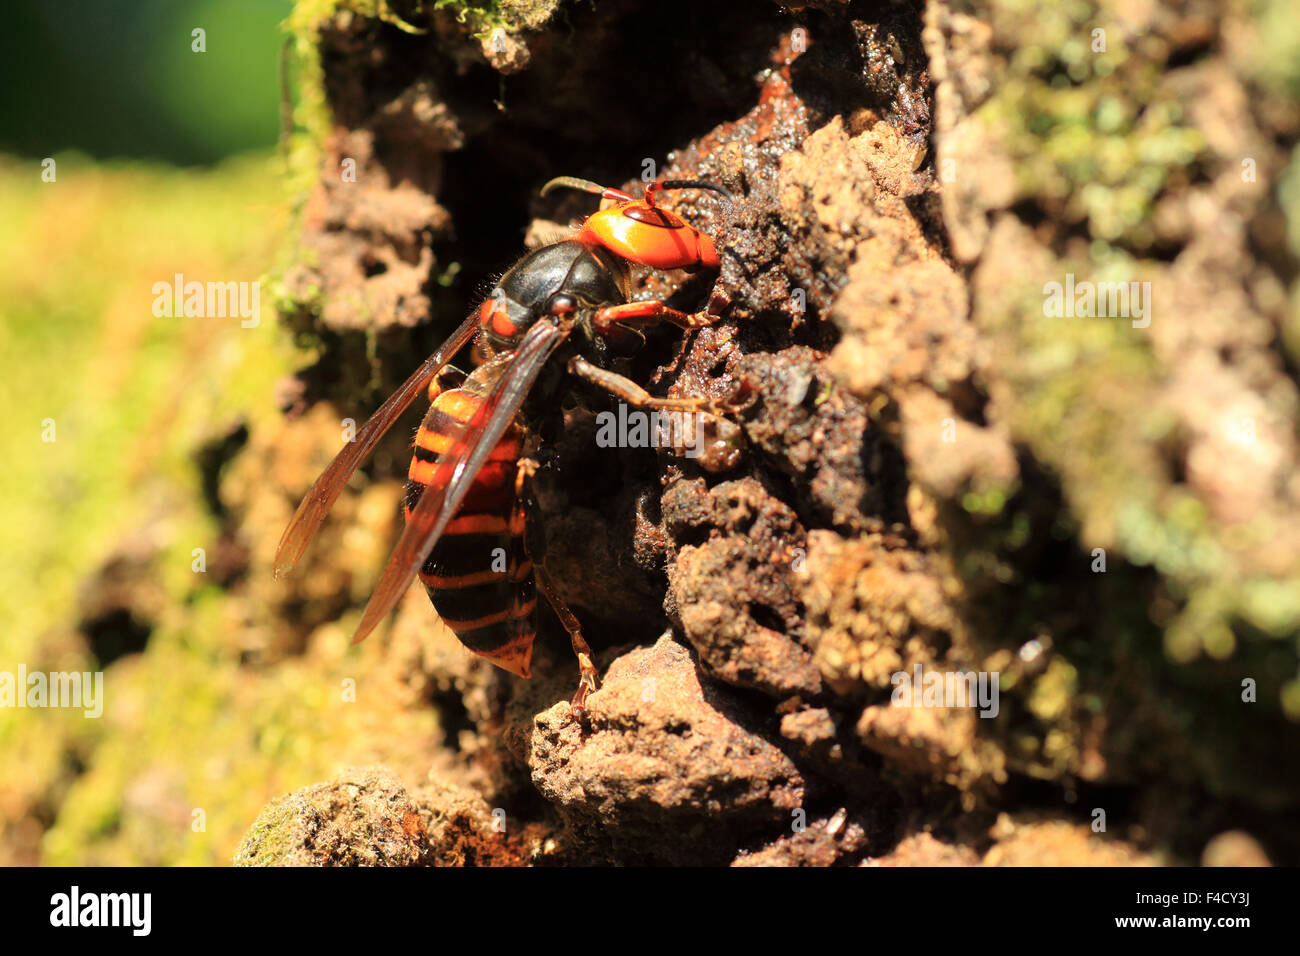 Japanese giant hornet (Vespa mandarinia) in Japan Stock Photo